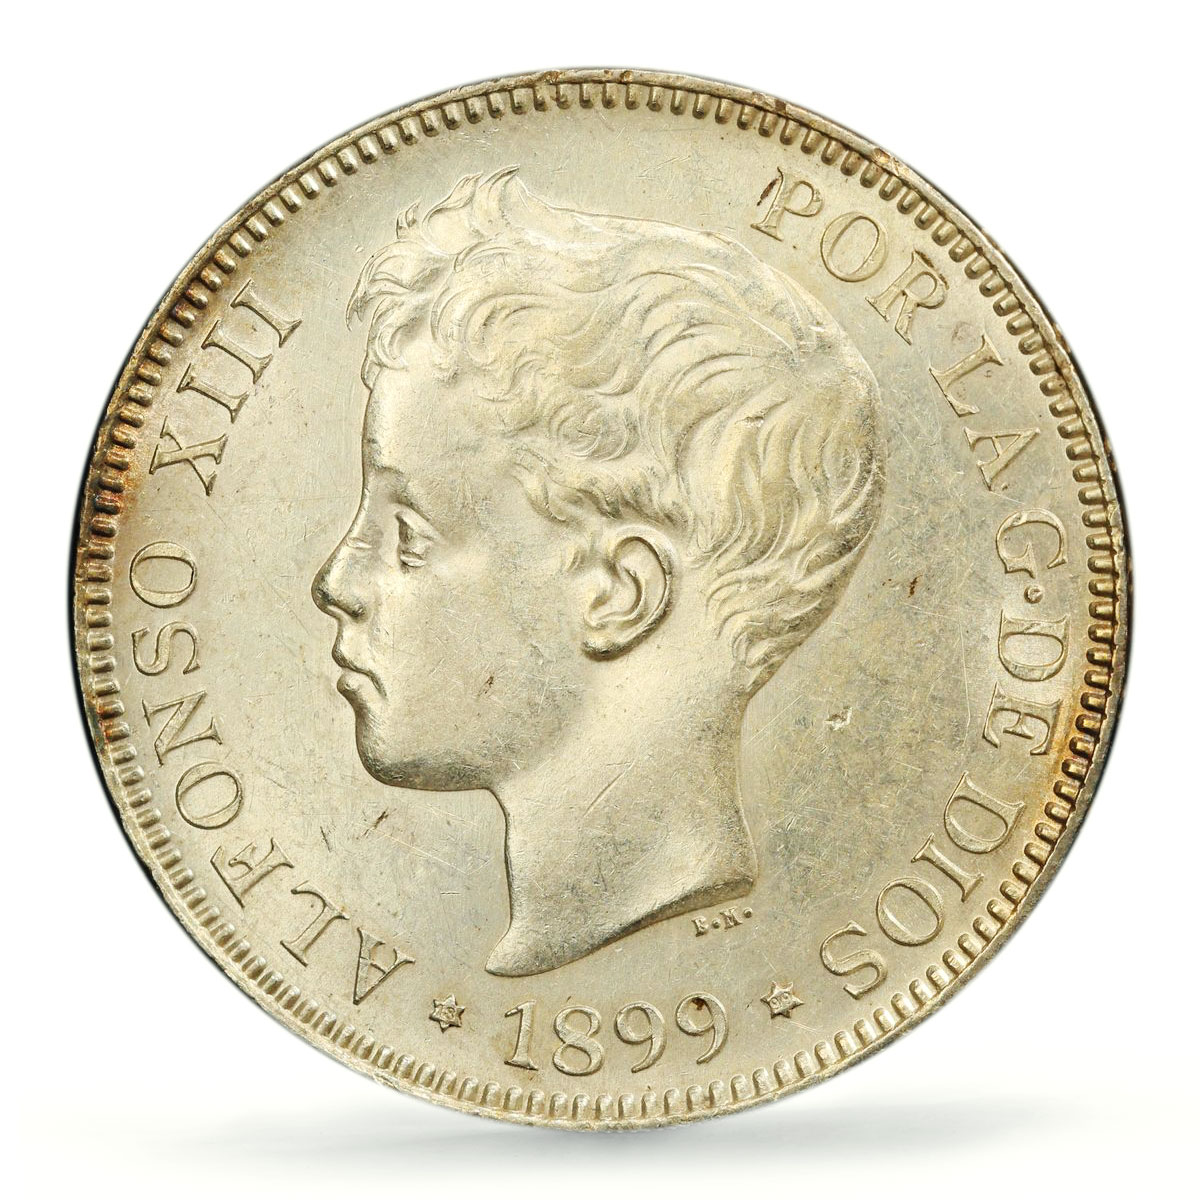 Spain 5 pesetas Regular Coinage Child Alfonso KM-707 AU58 PCGS silver coin 1899